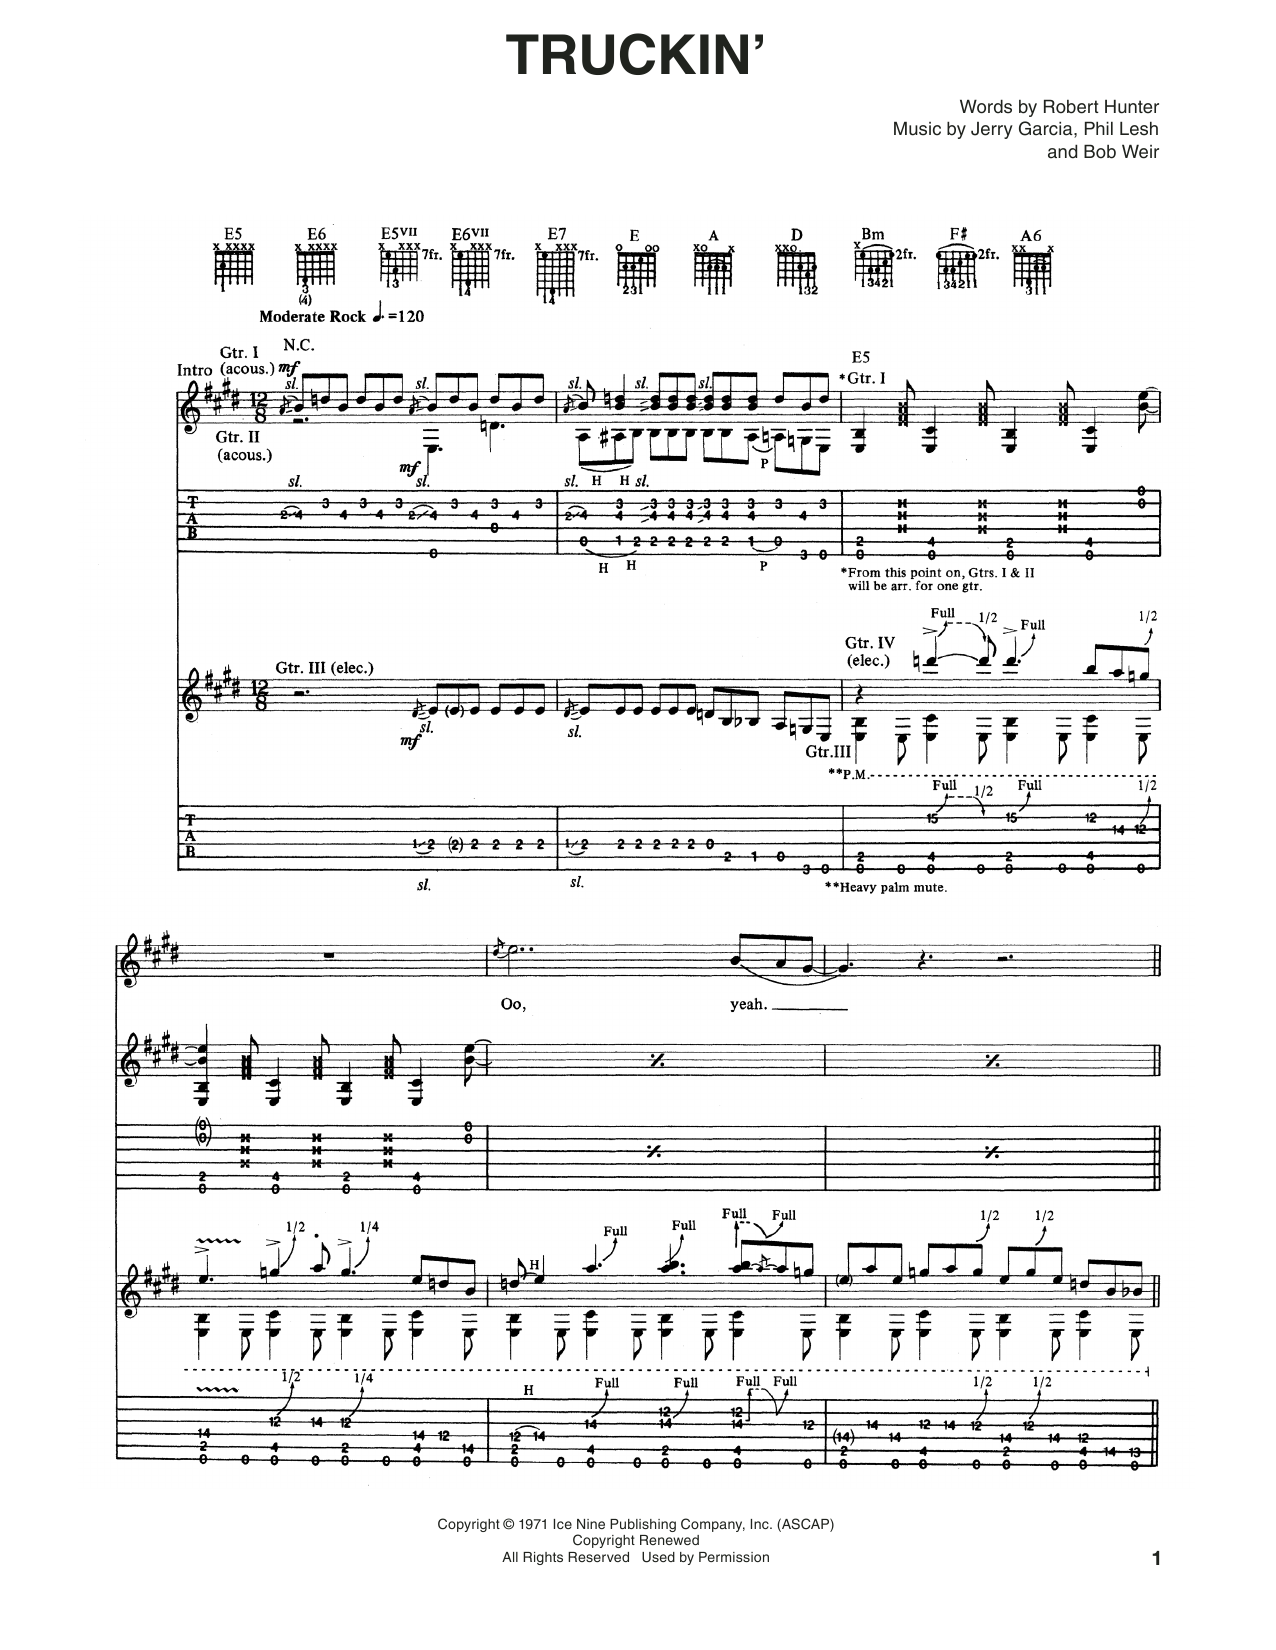 Grateful Dead Truckin' sheet music notes and chords arranged for Guitar Chords/Lyrics